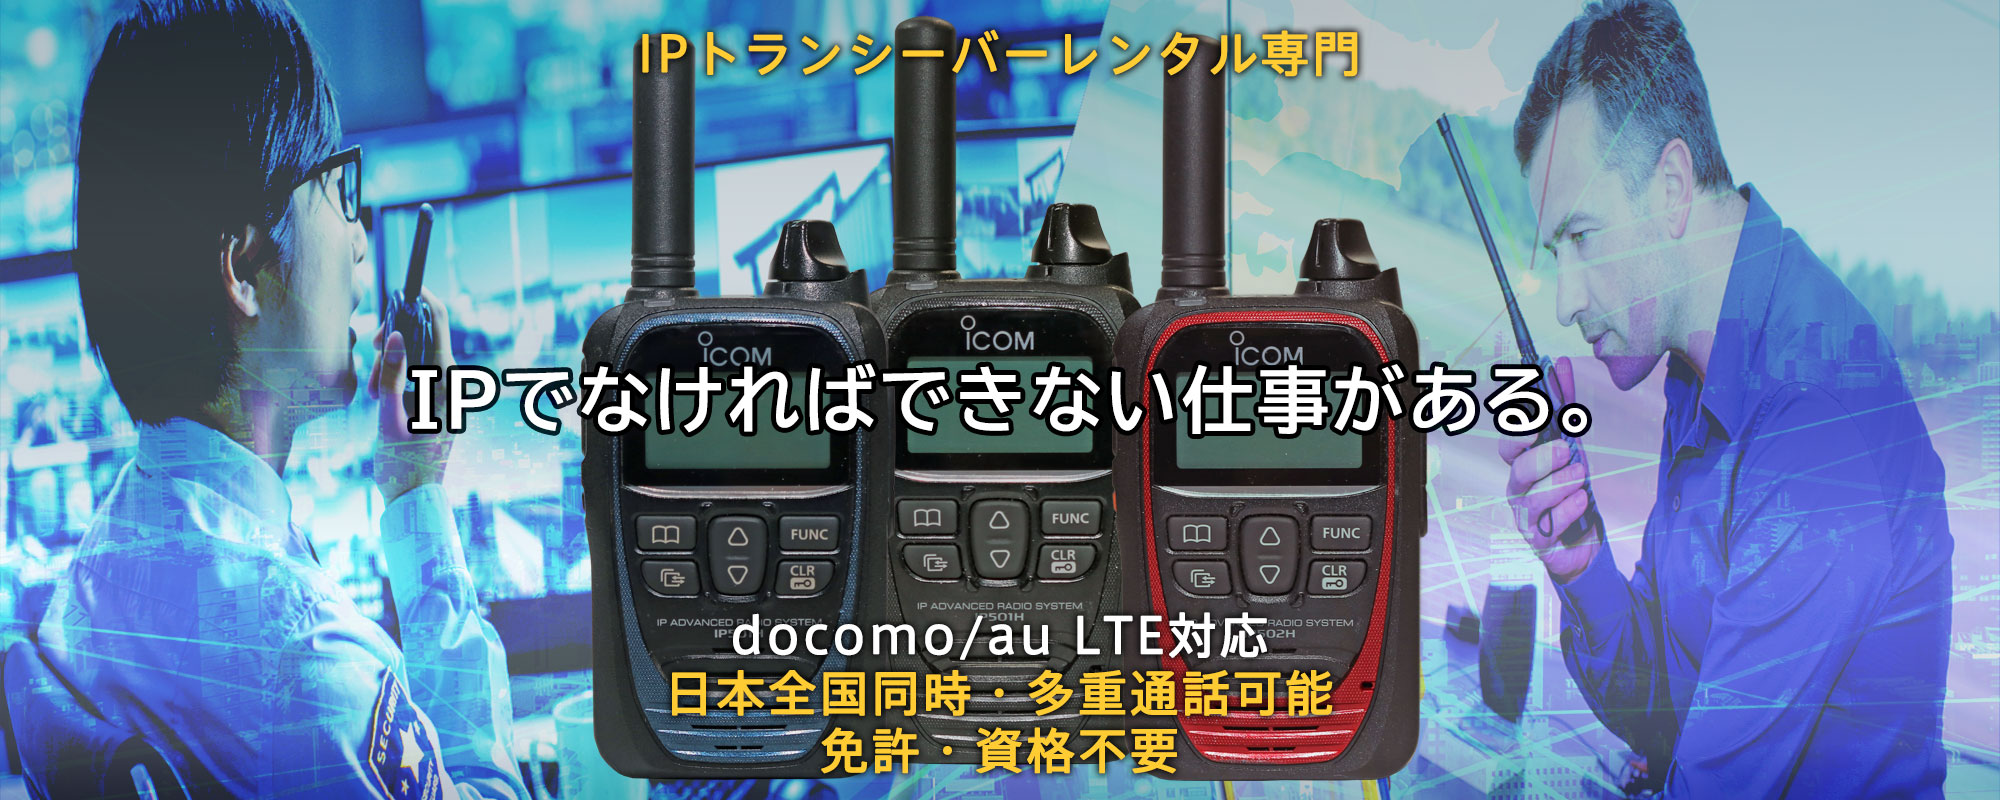 docomo/au LTE対応IPトランシーバーレンタル専門 - IPでなければできない仕事がある。